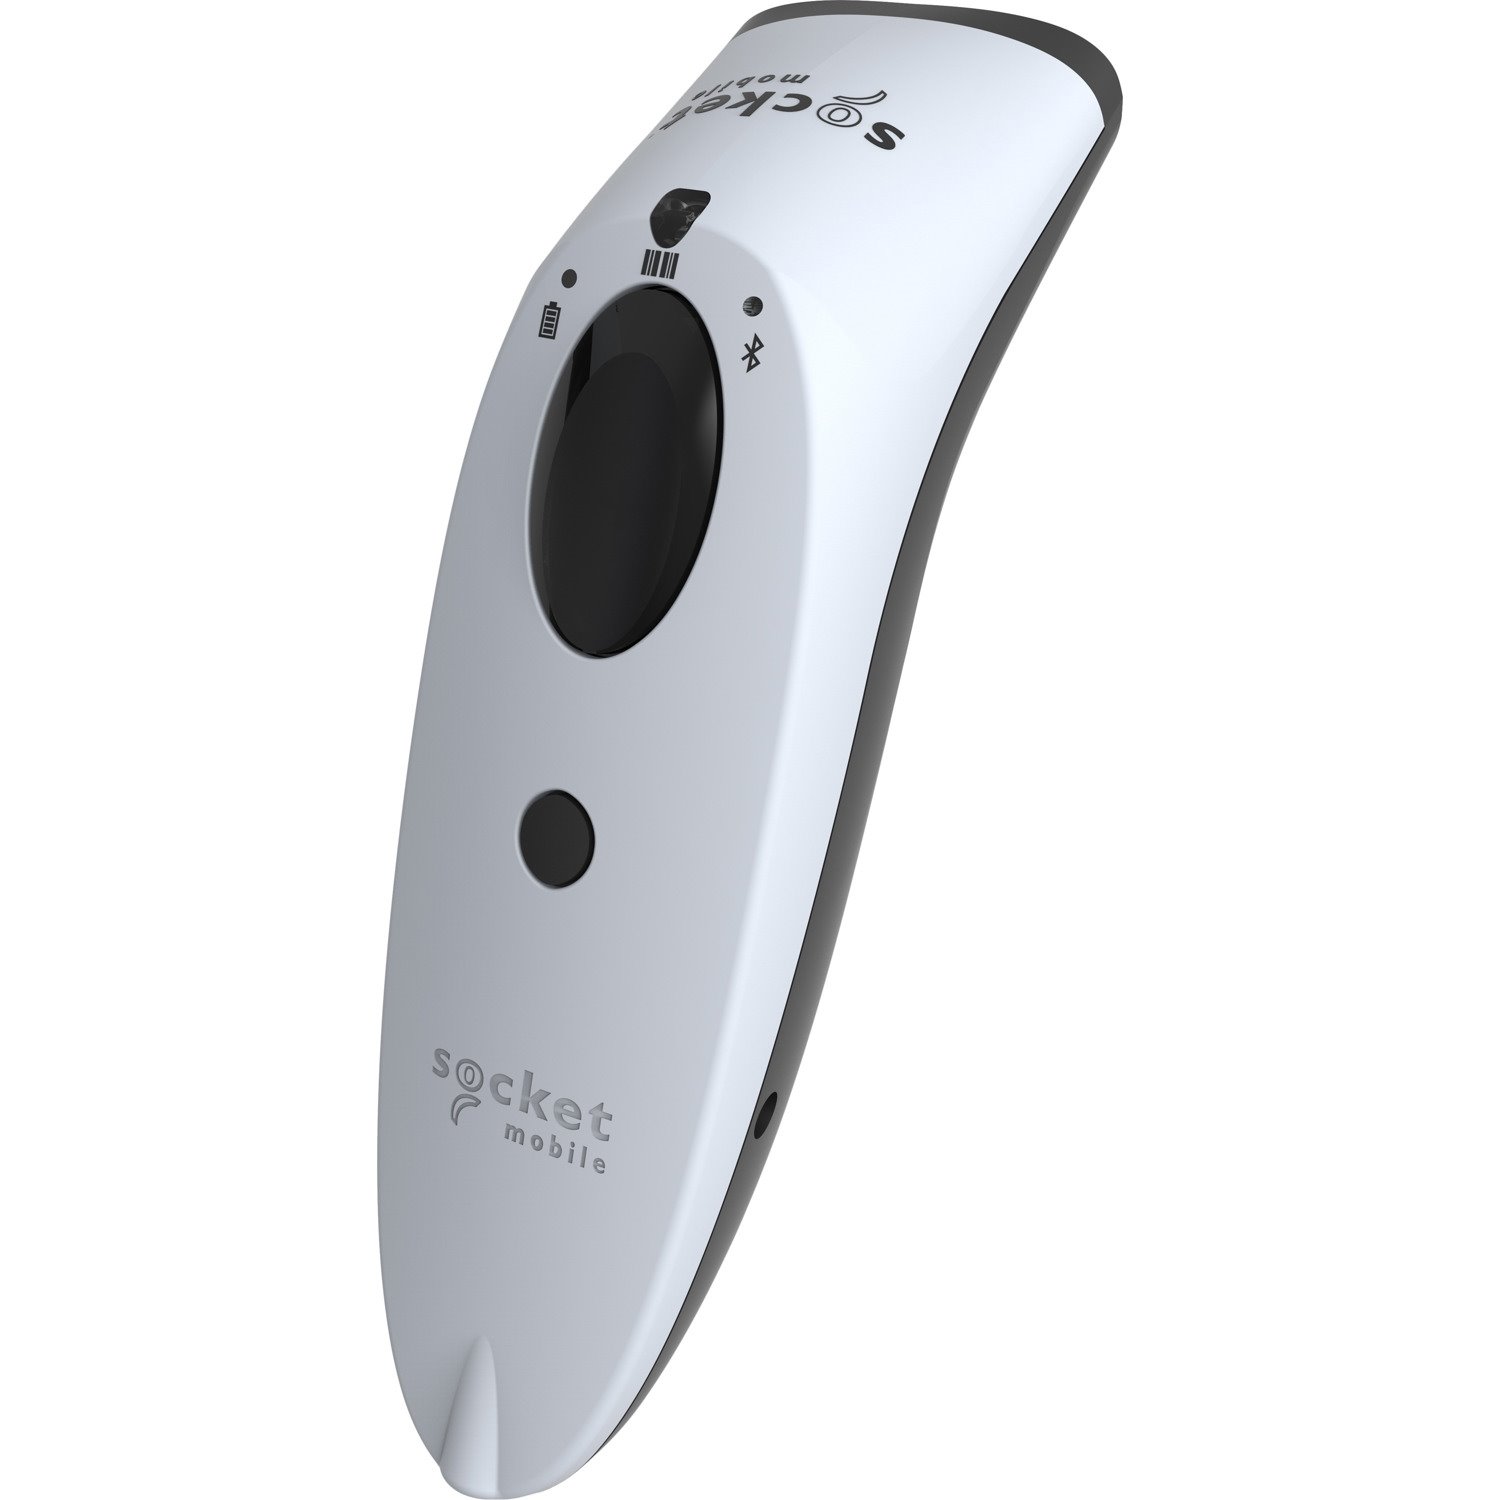 Socket Mobile SocketScan S740 Handheld Barcode Scanner - Wireless Connectivity - White, Black